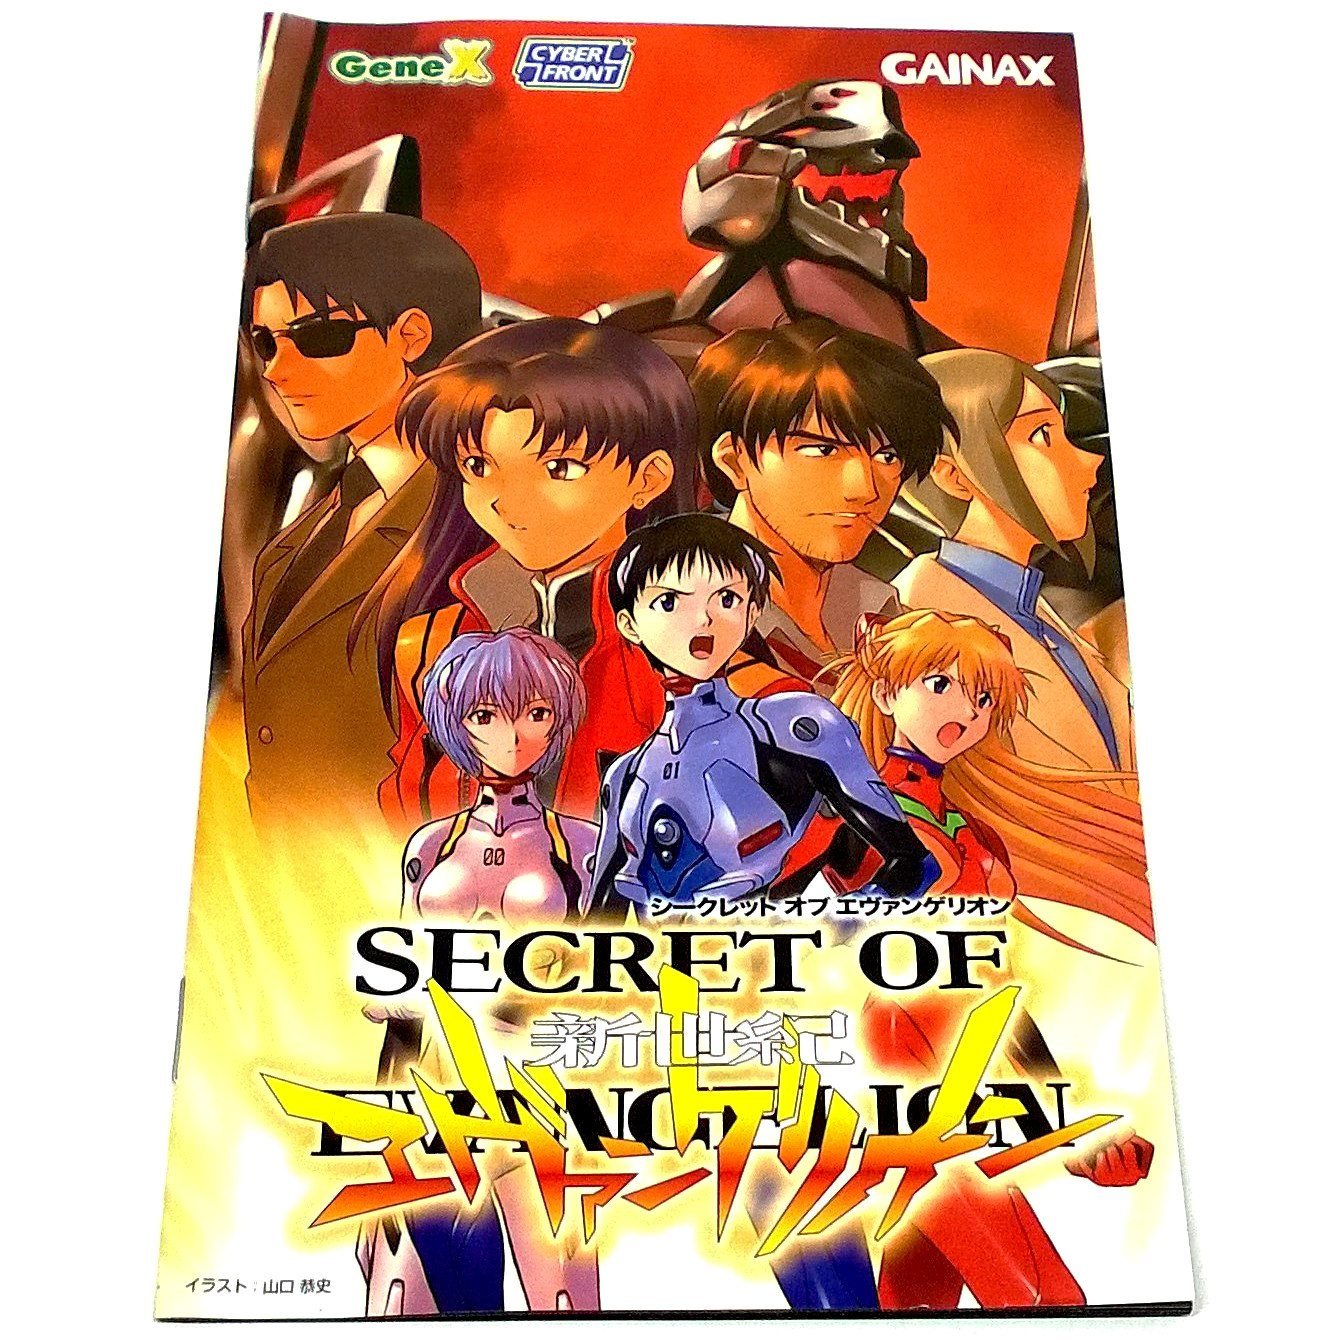 Game - Secret of Evangelion